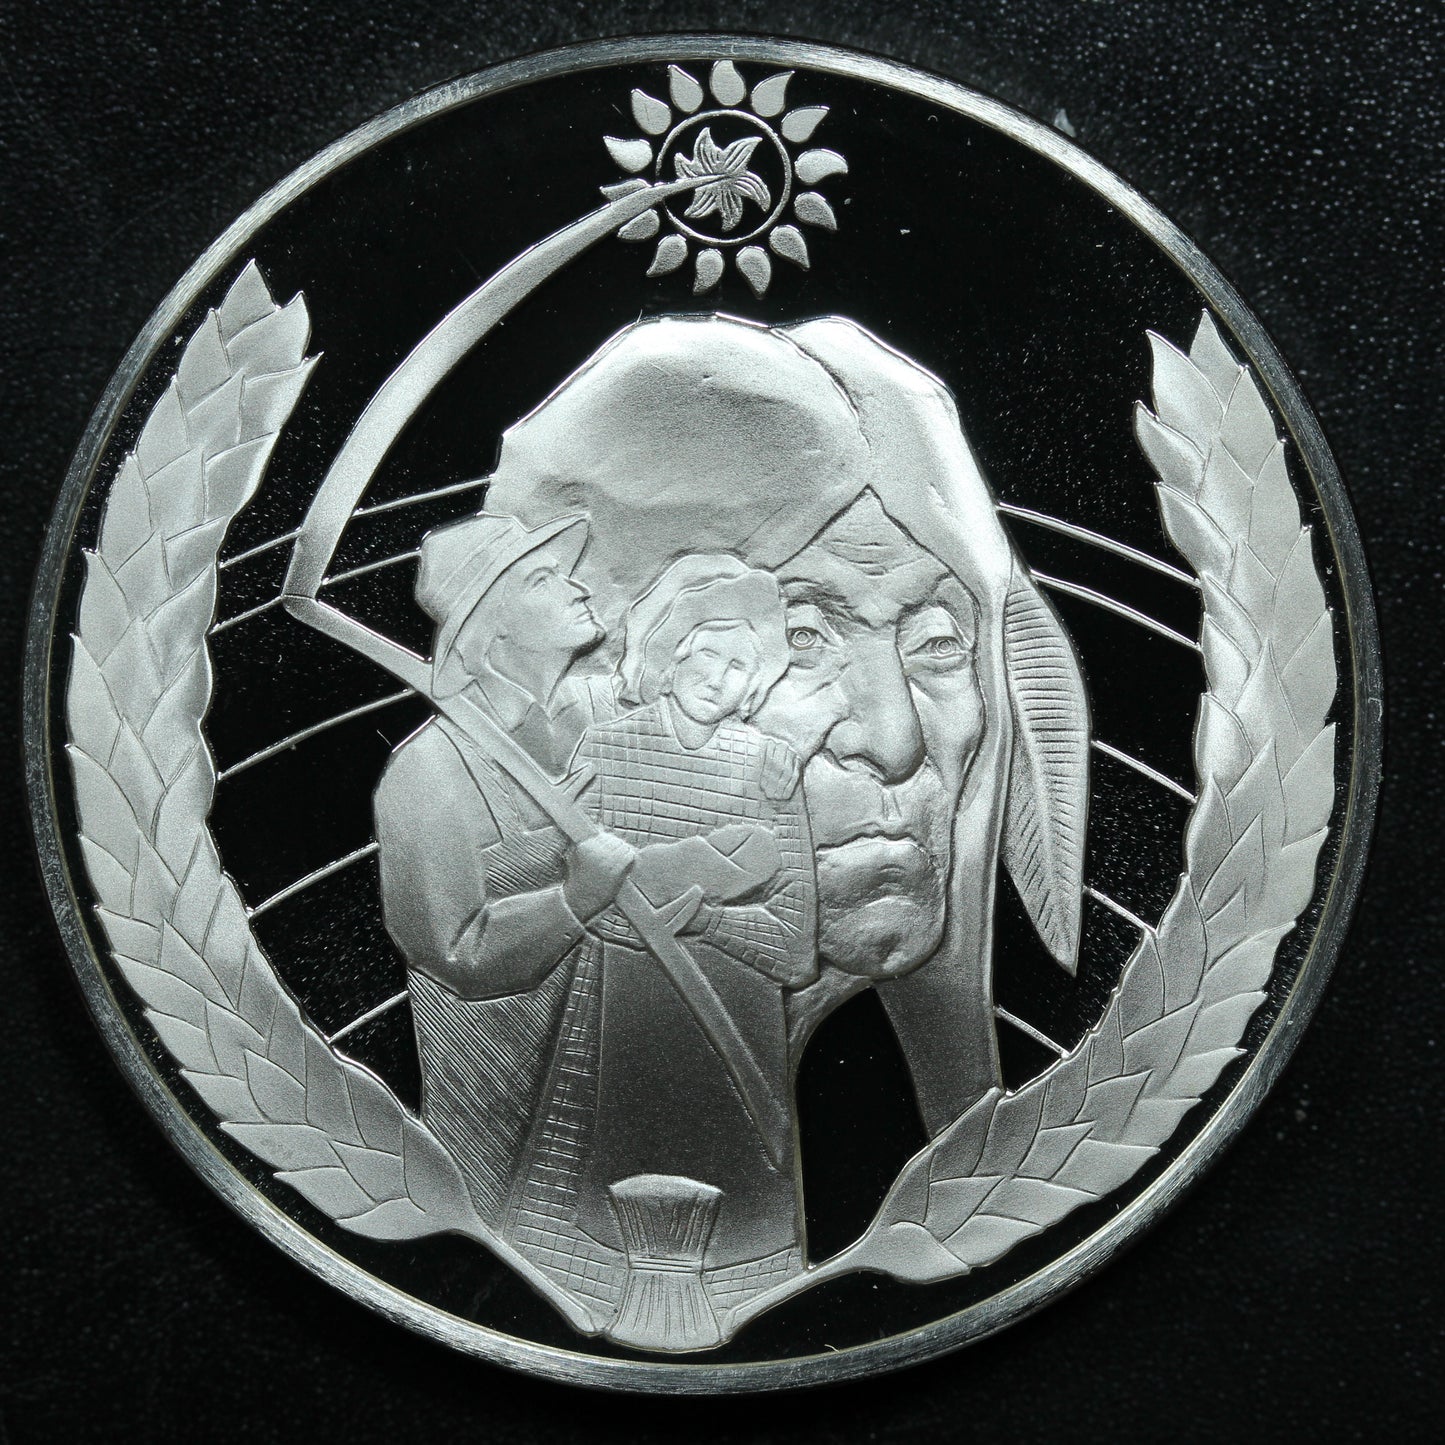 Franklin Mint 50 State Bicentennial Medal - NORTH DAKOTA Sterling Silver Proof w/ Capsule